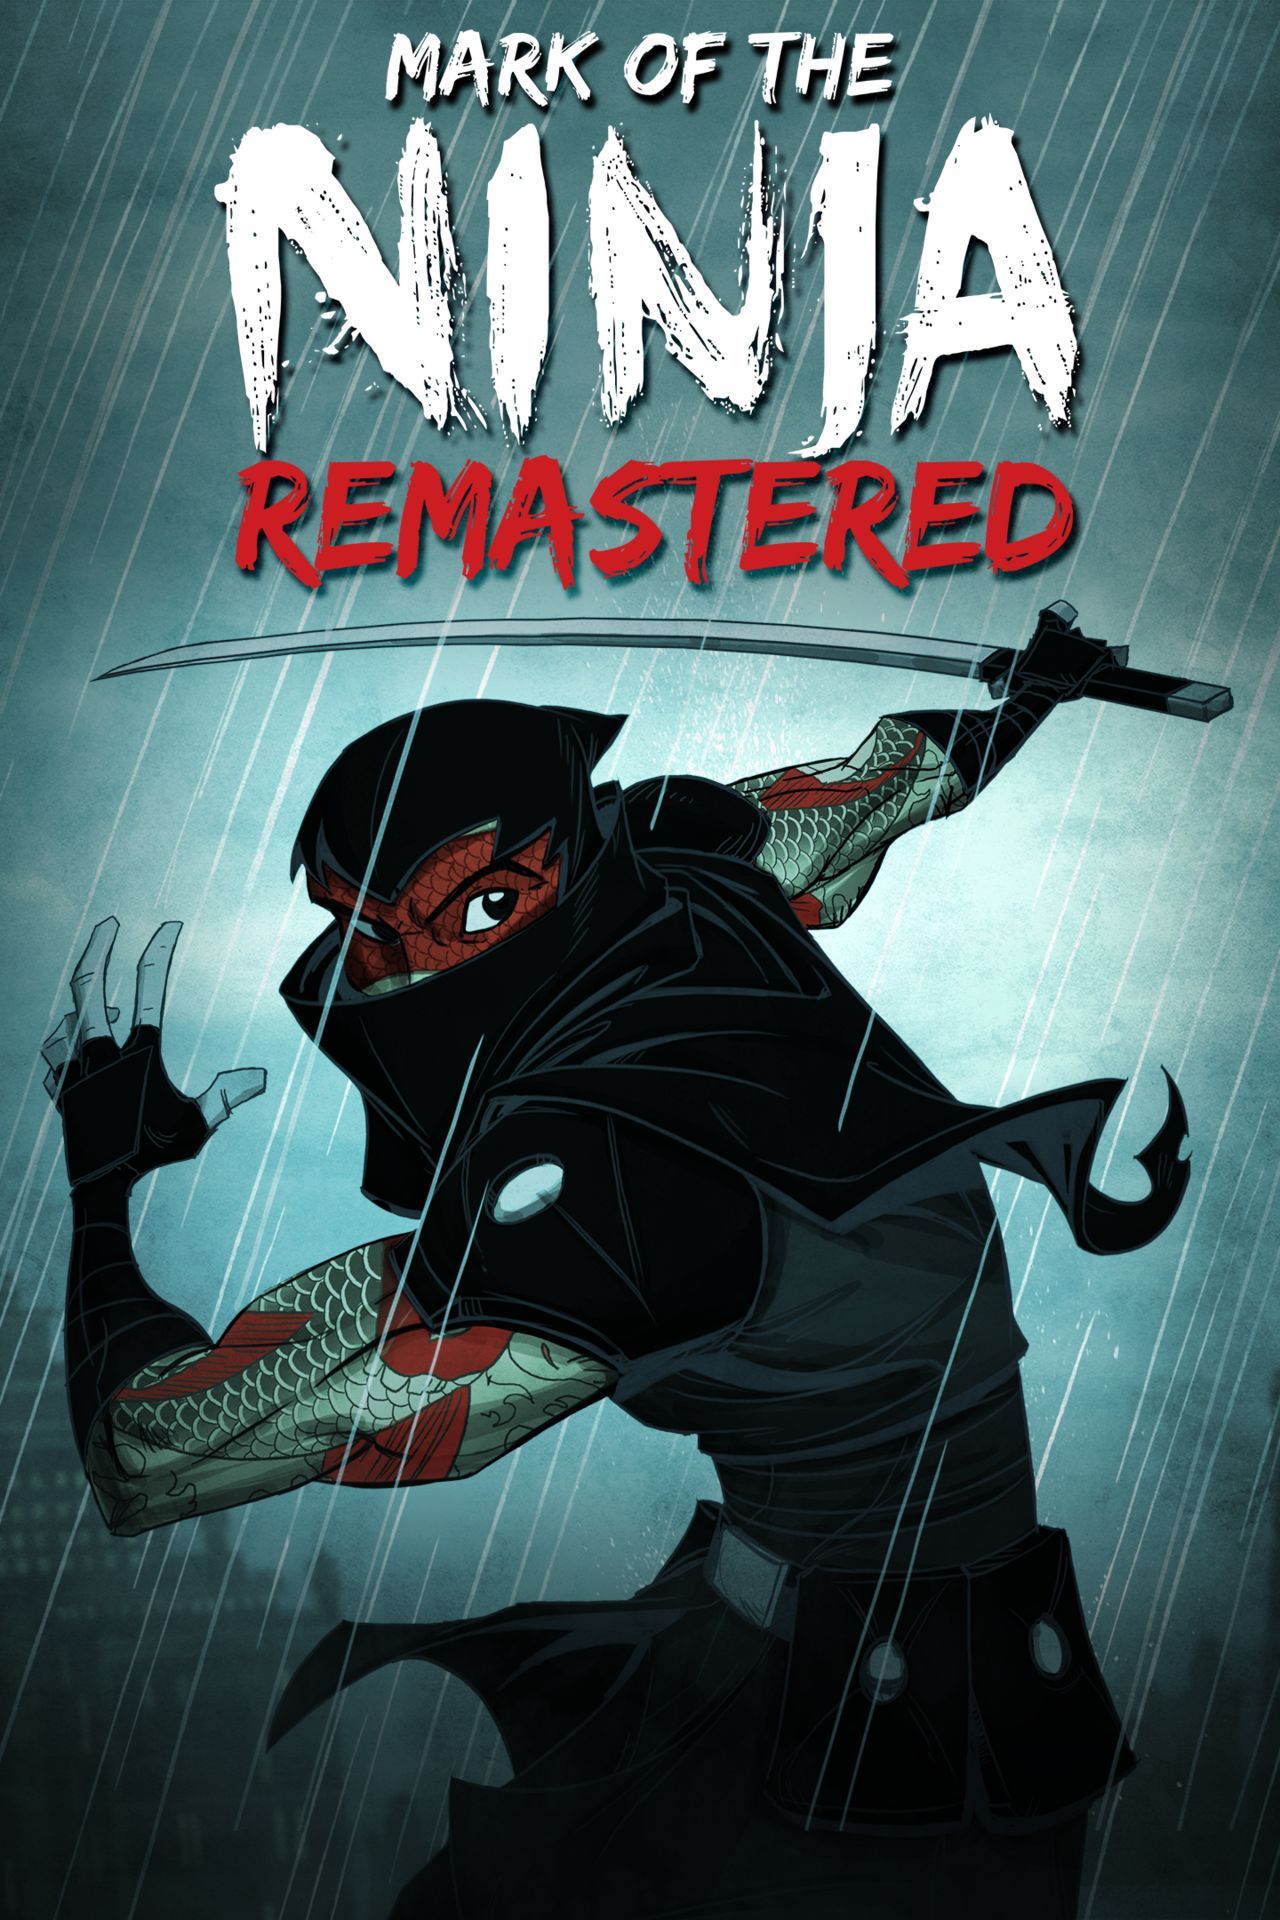 download mark of the ninja ps3